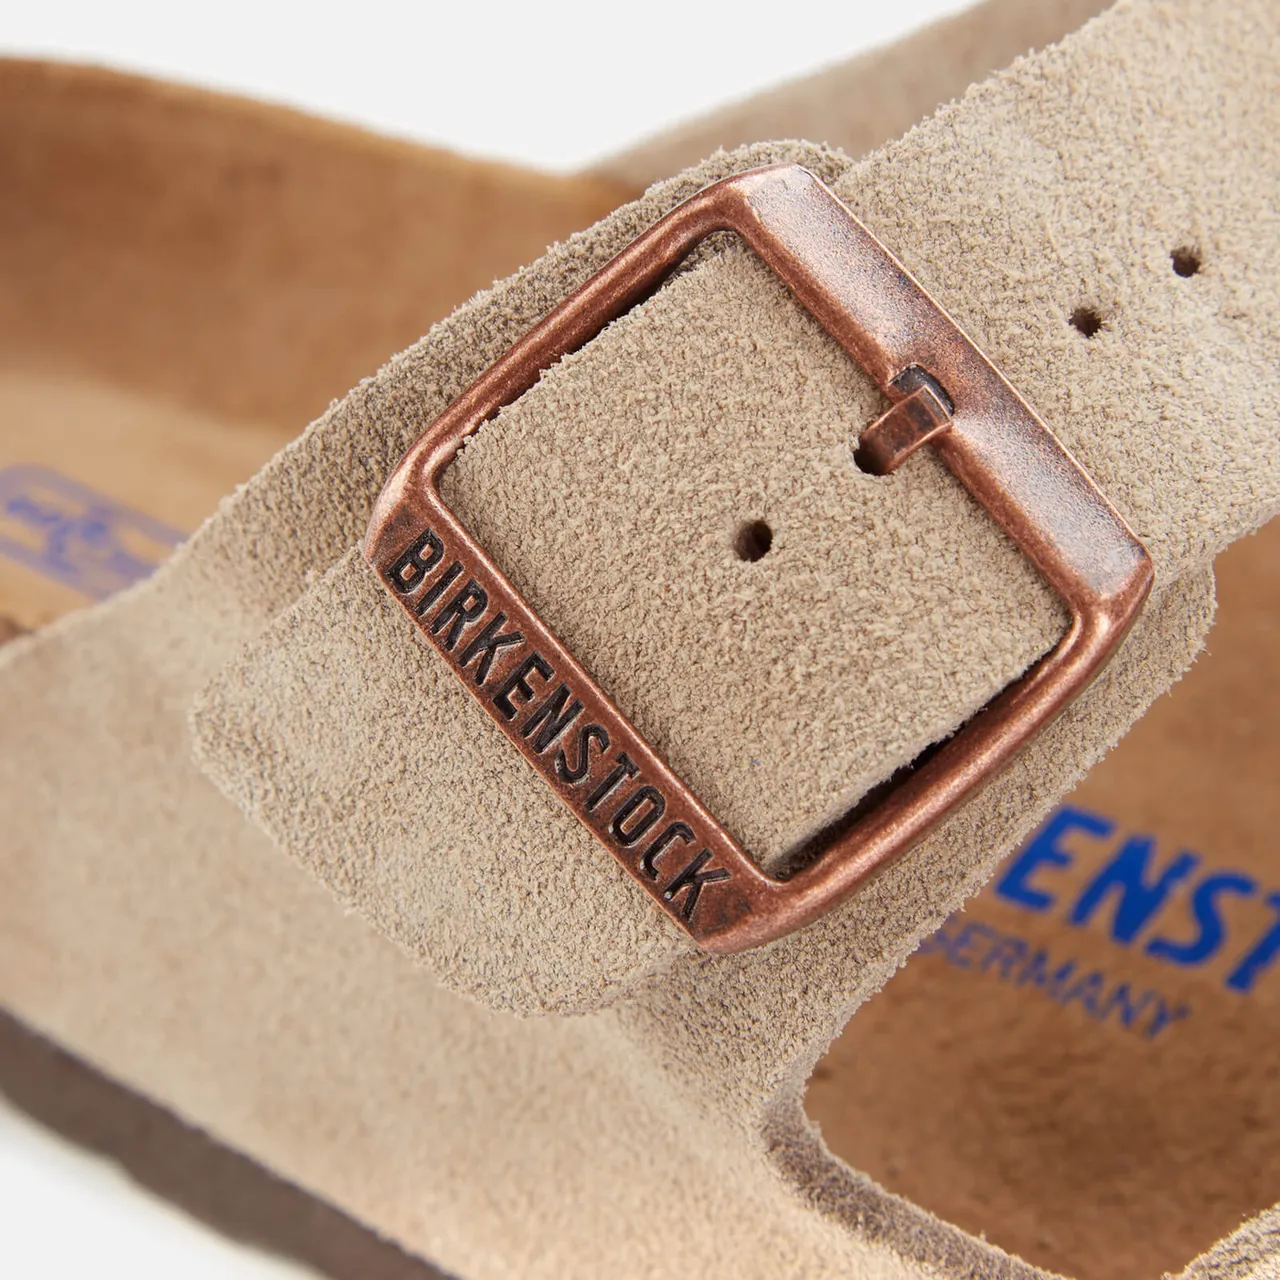 Birkenstock Men's Arizona Sfb Suede Double Strap Sandals - Taupe - EU 41/UK